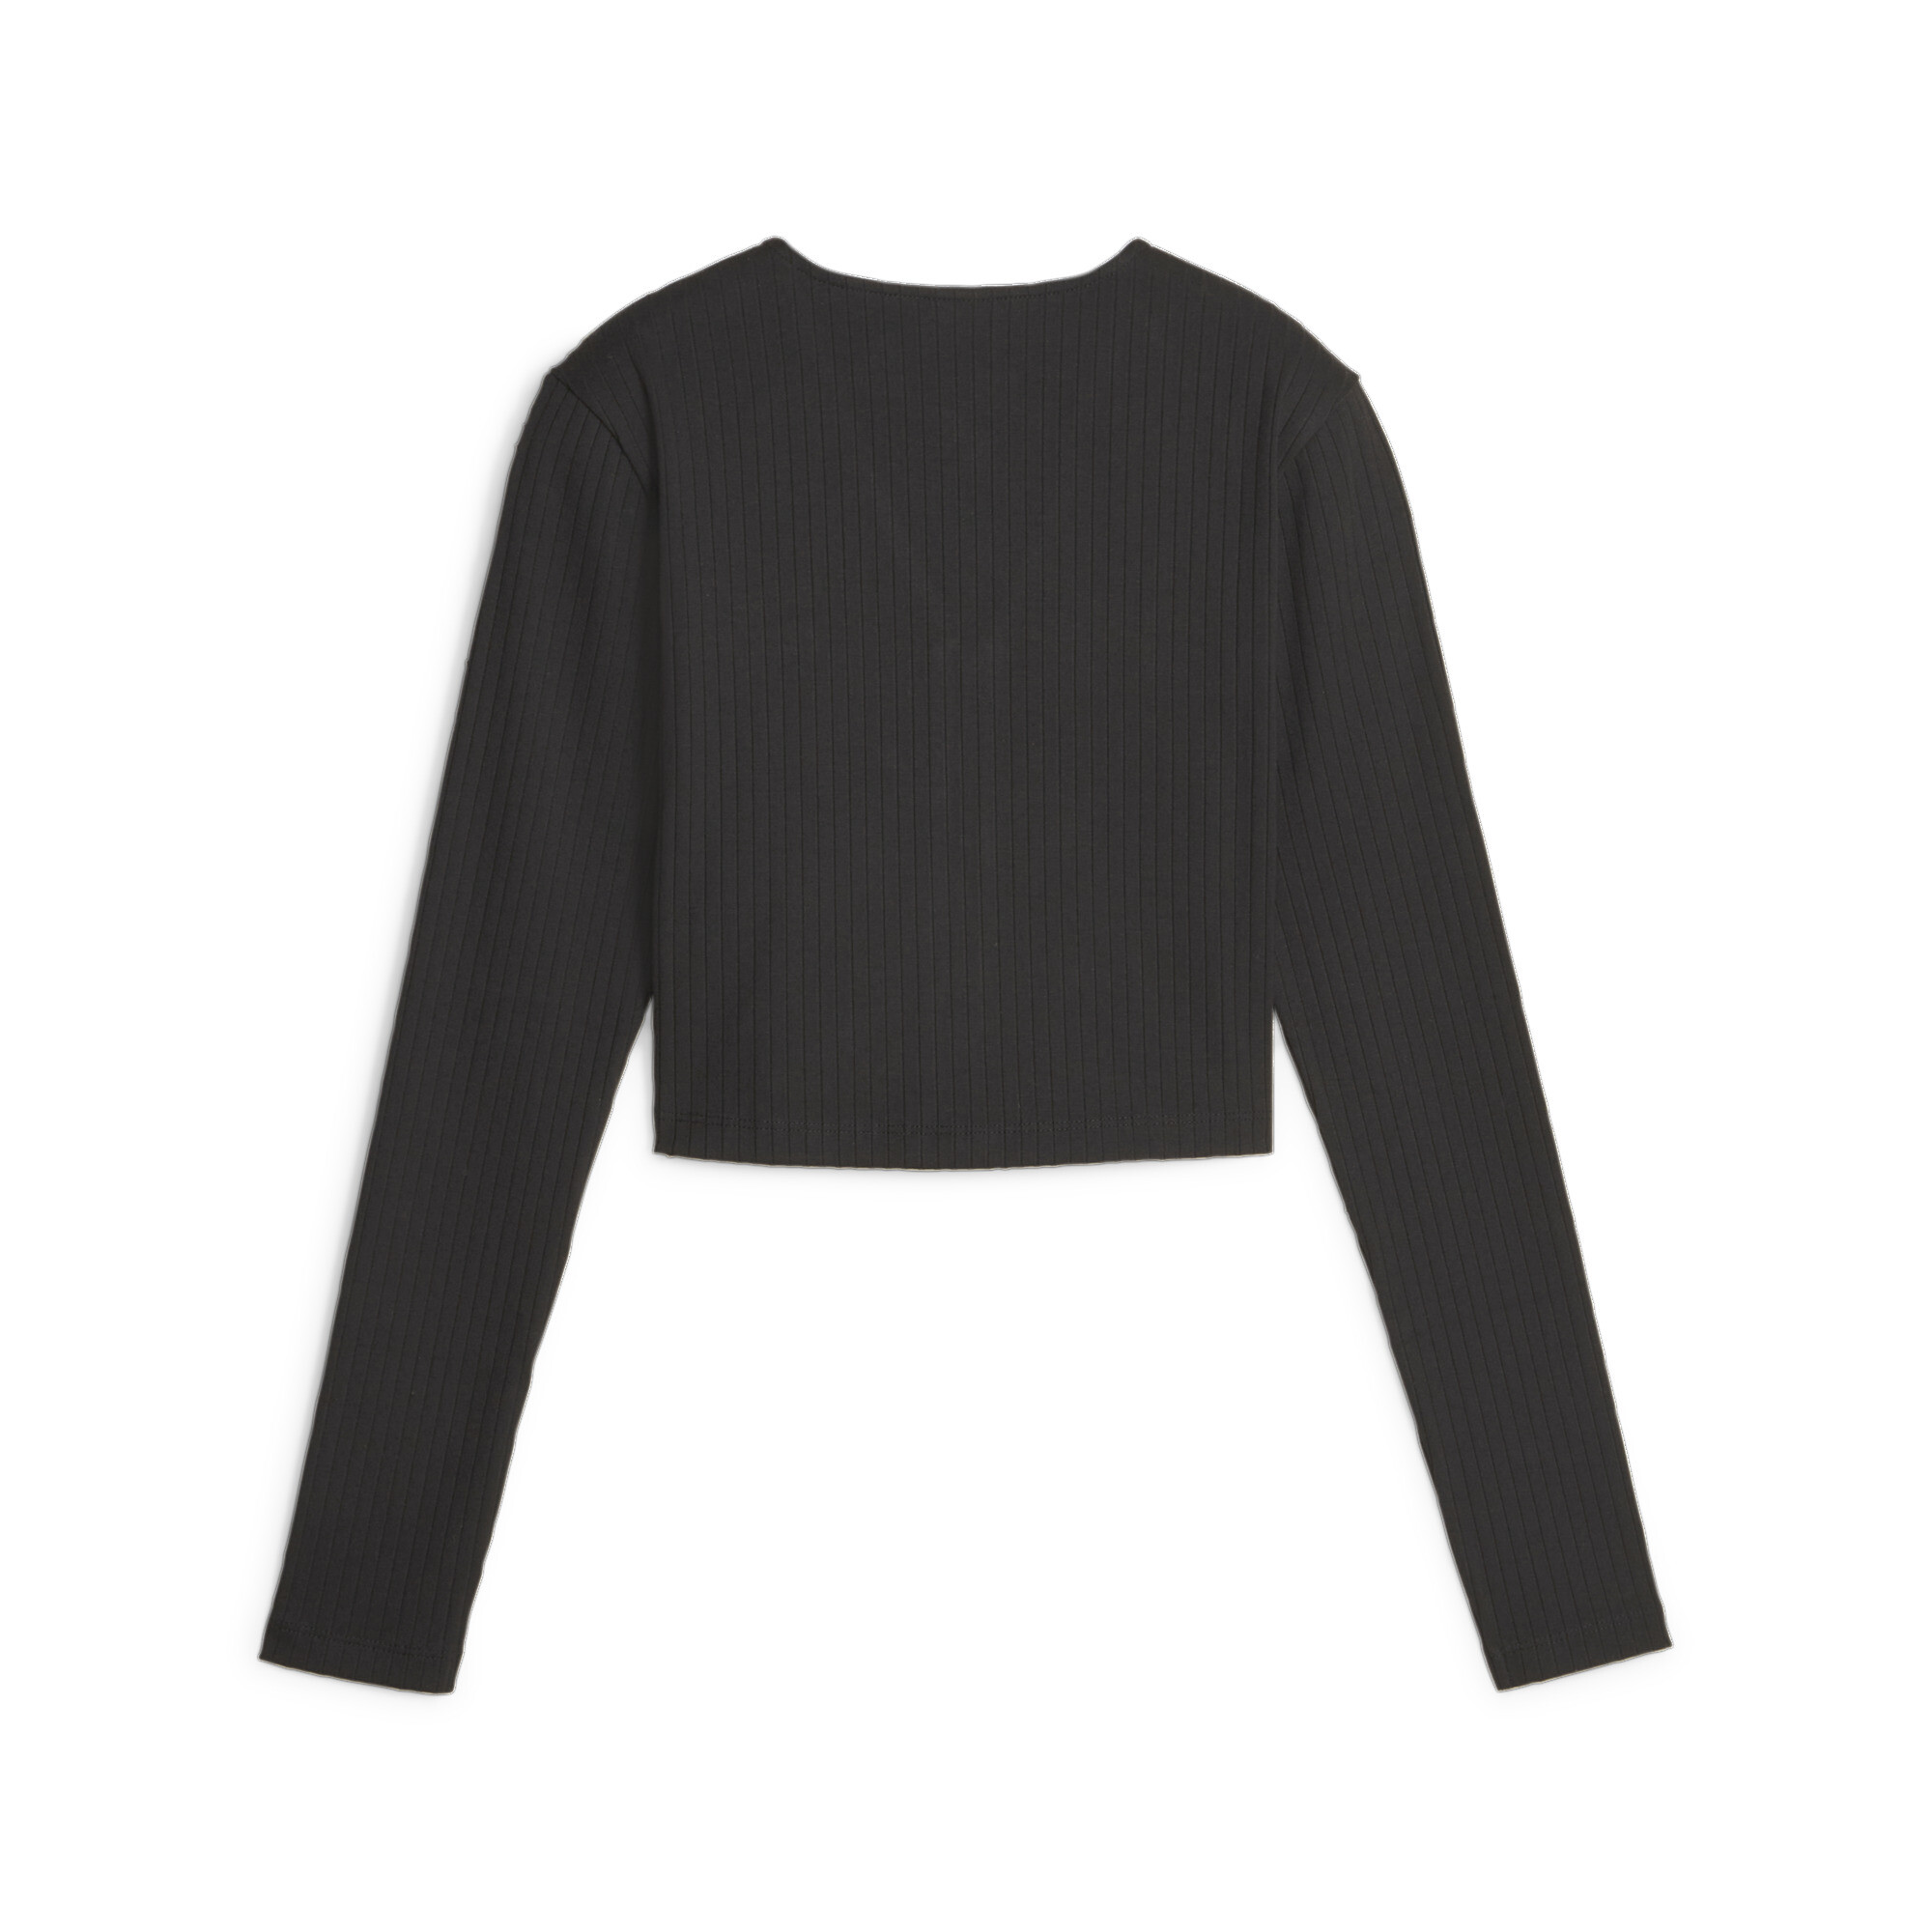 Women's PUMA Classics Ribbed Long Sleeve Shirt In Black, Size XL